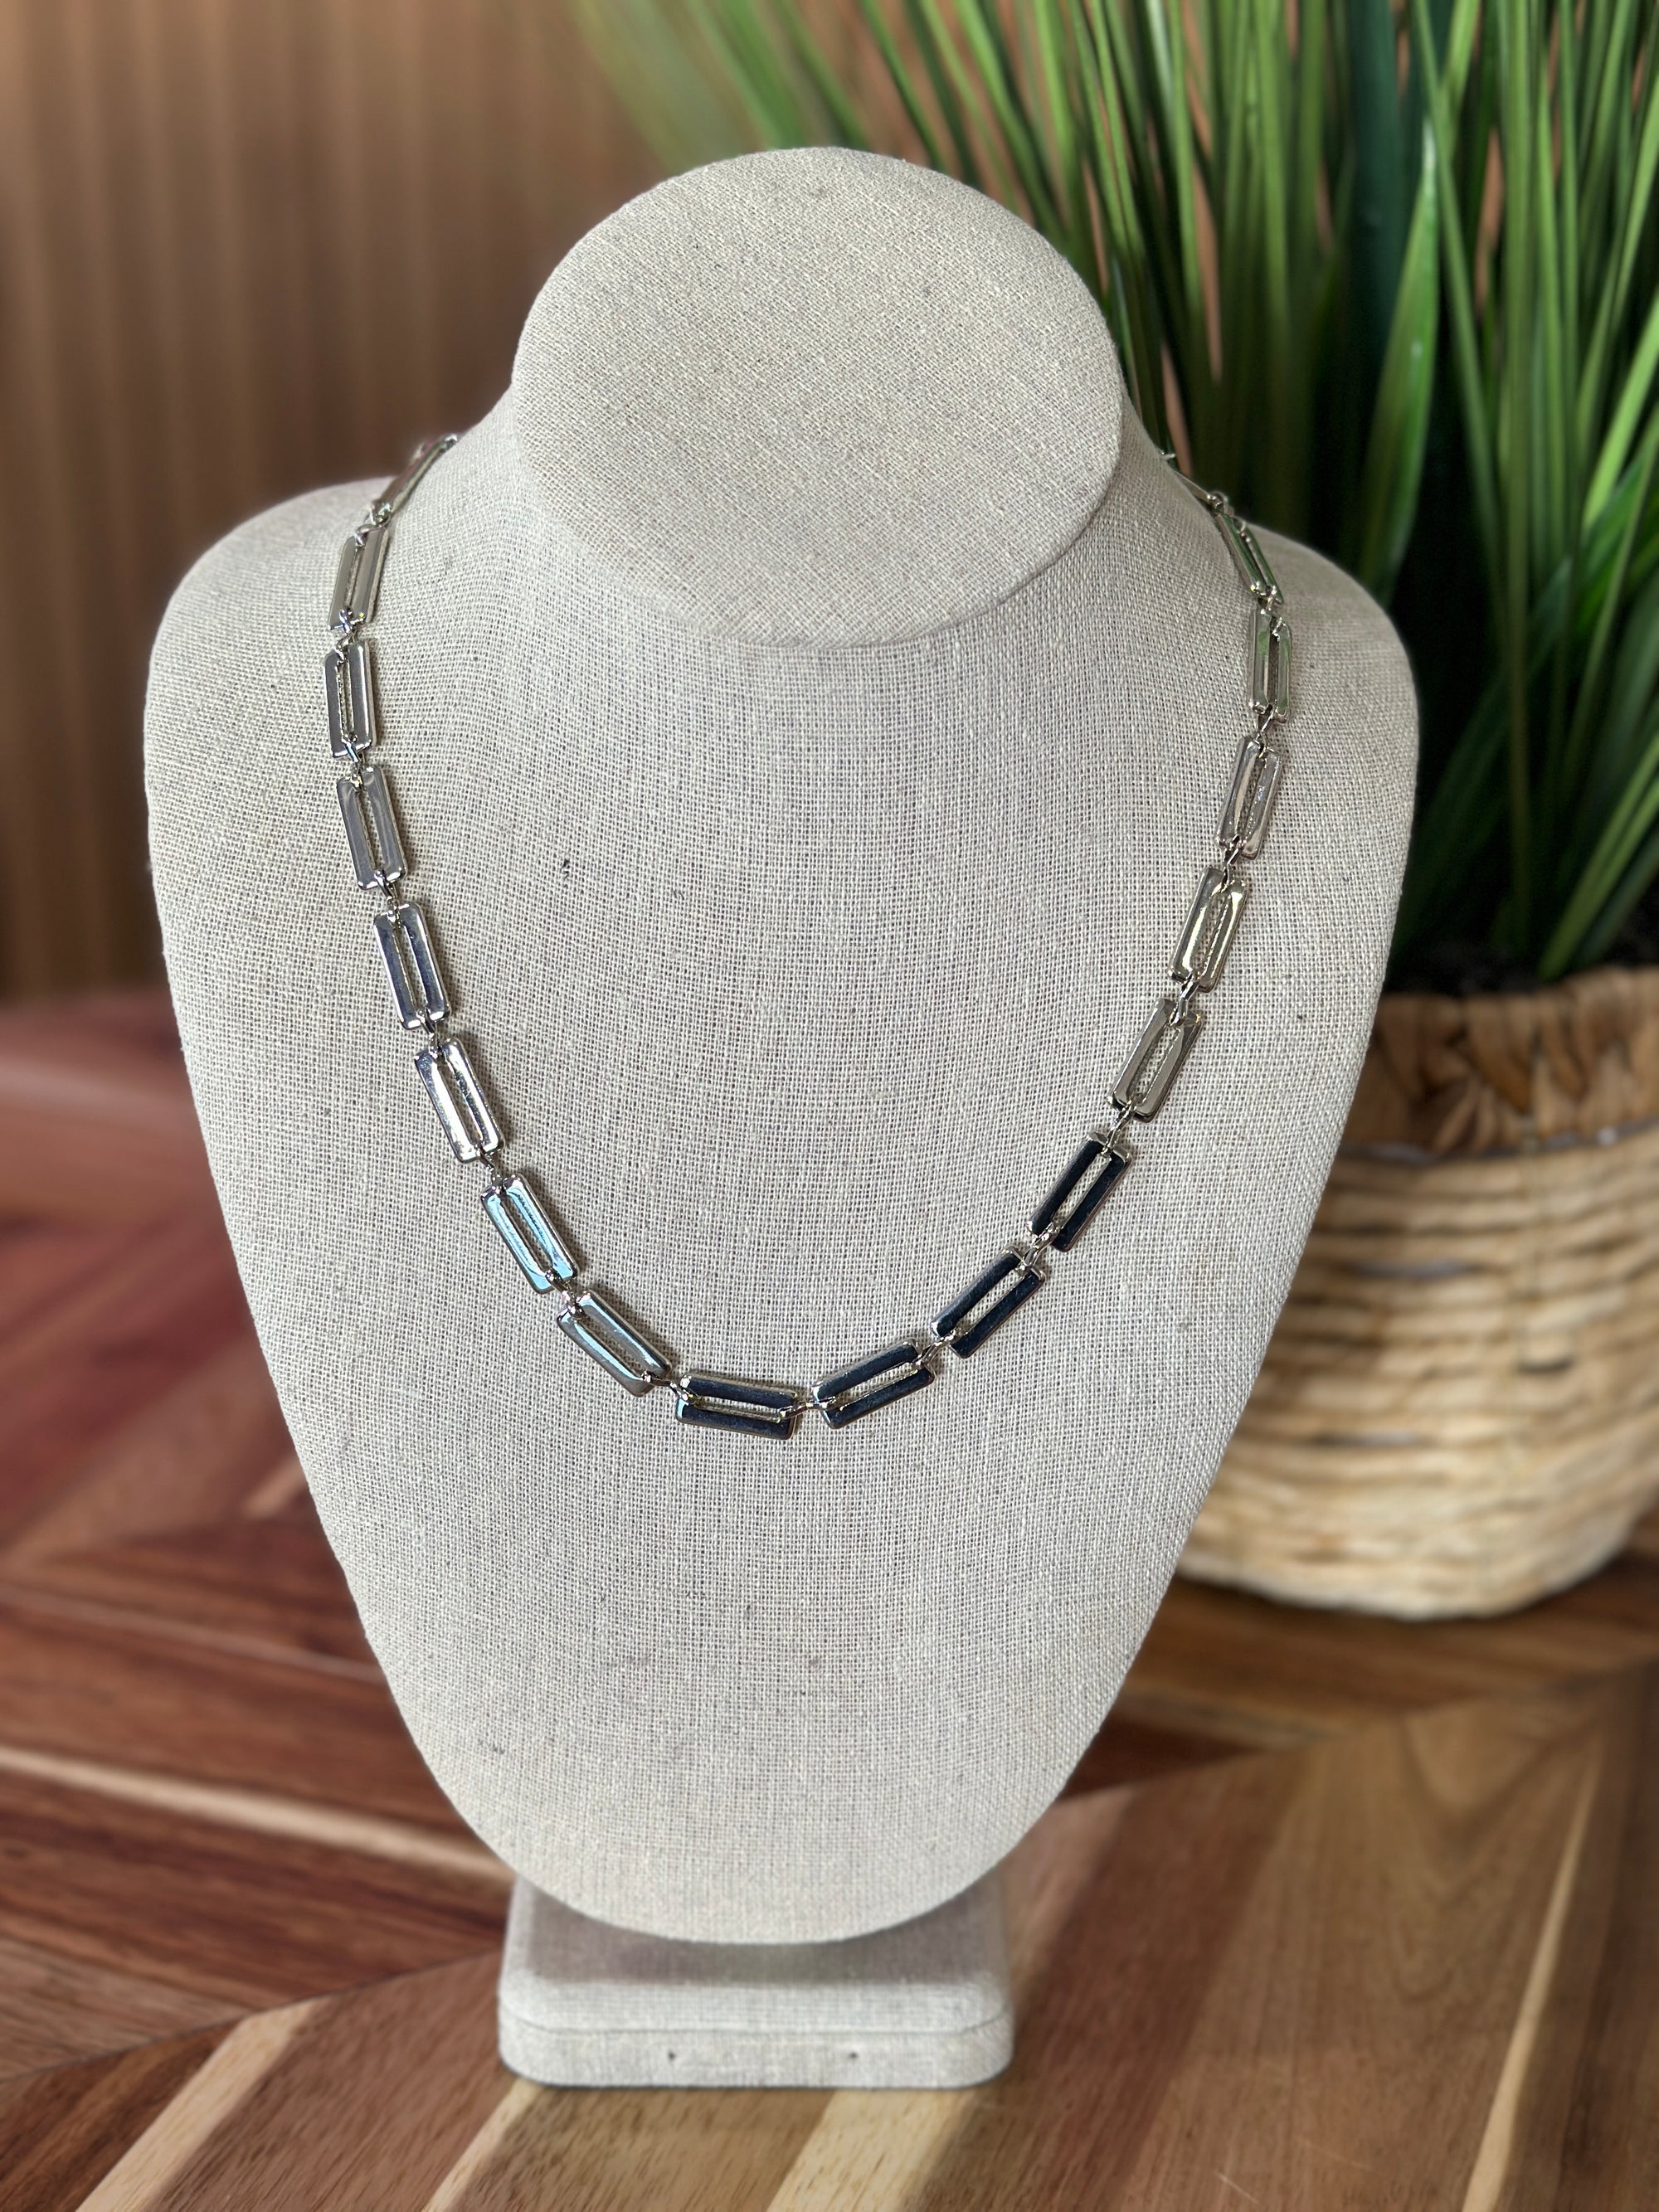 3 Strand Individual Piece Necklace - Silver